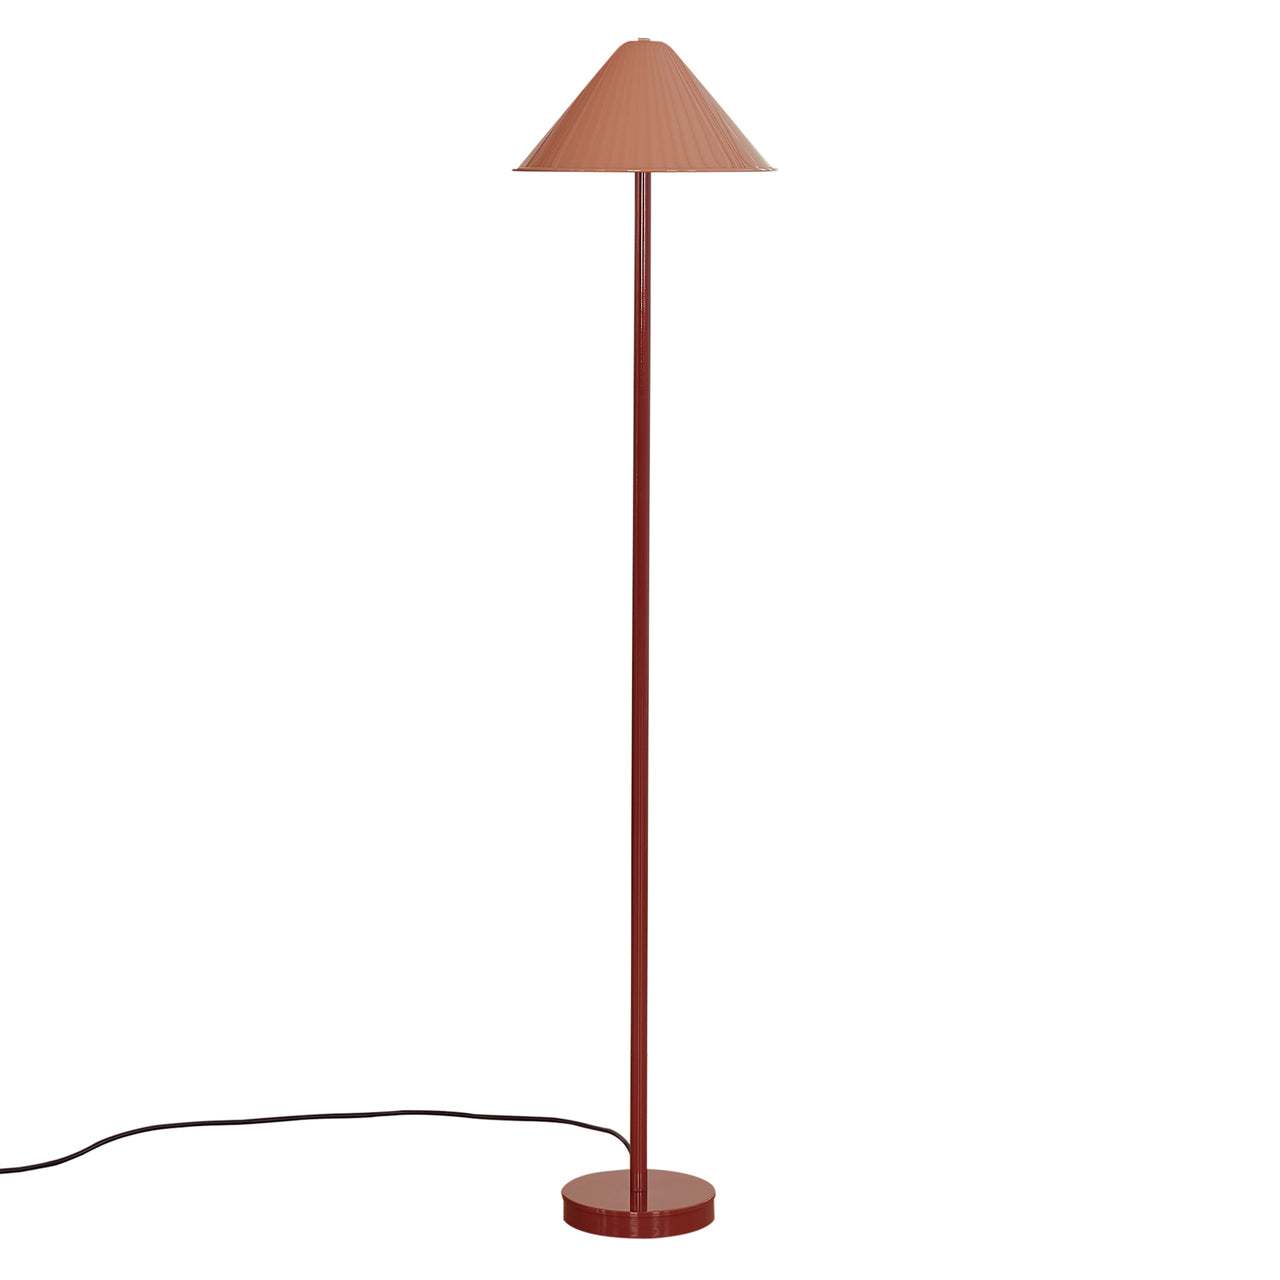 Tipi Floor Lamp: Peach + Oxide Red